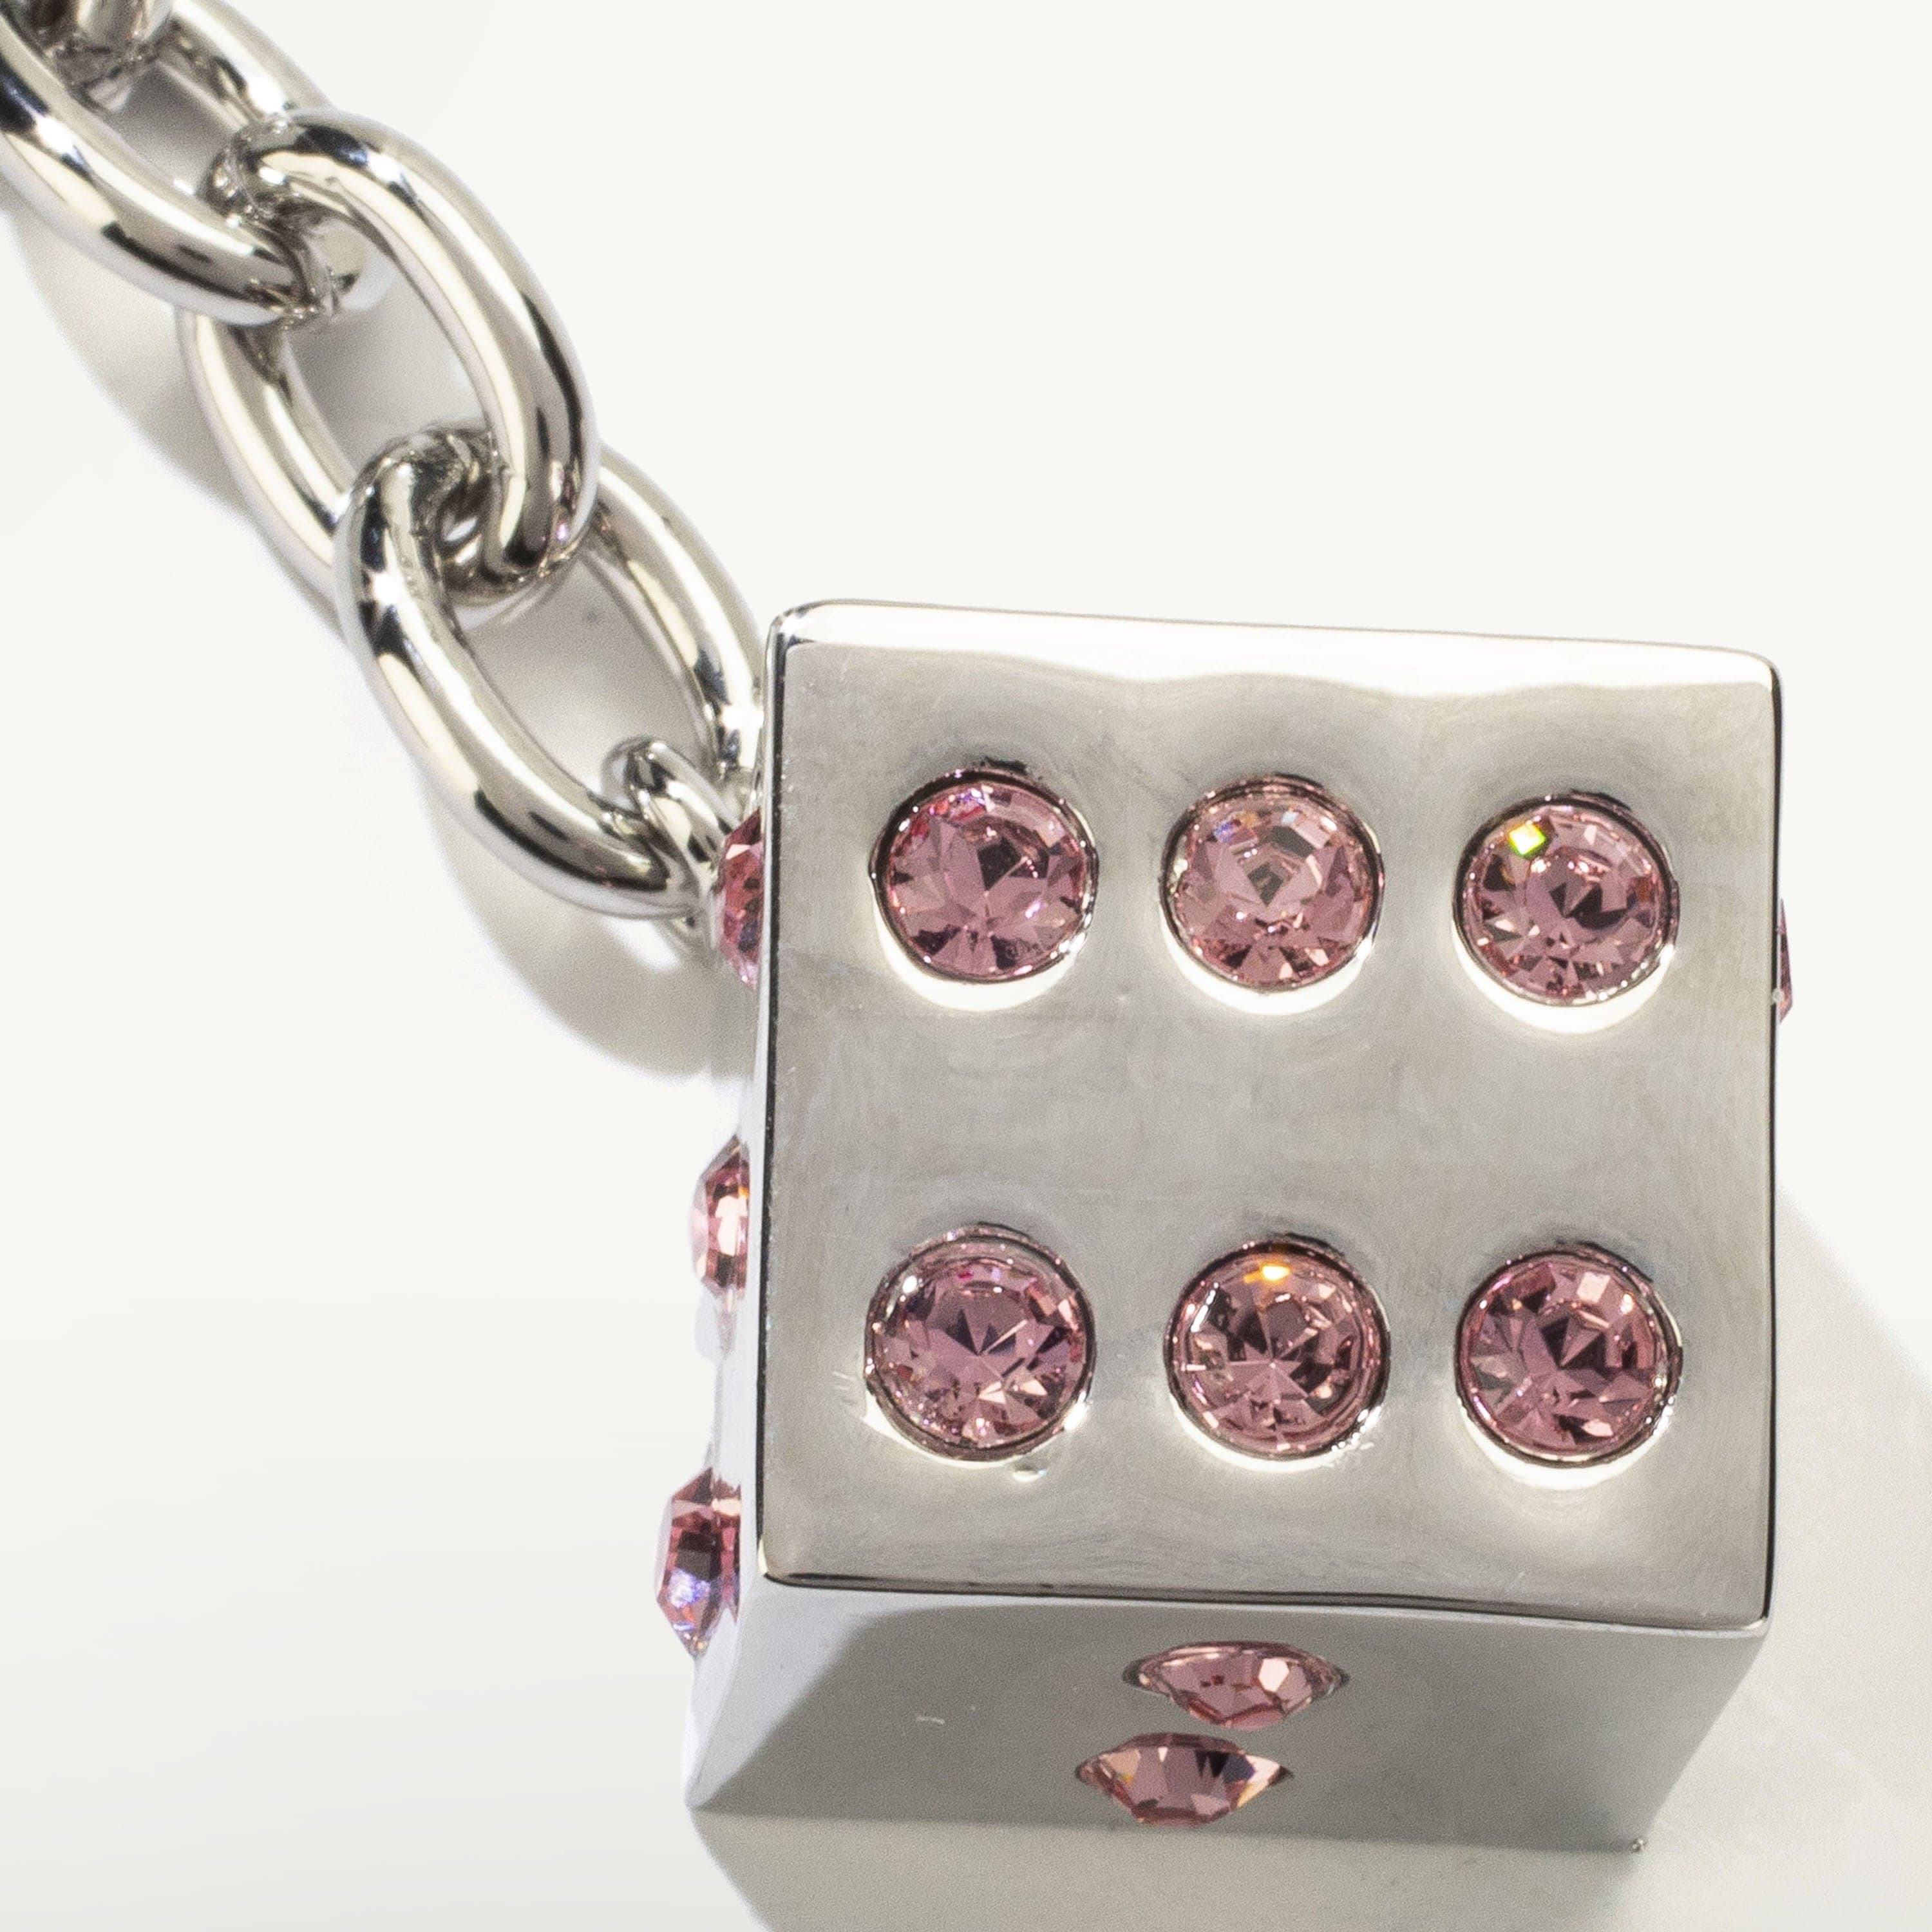 Kalifano Crystal Keychains Las Vegas Rose Dice Keychain made with Swarovski Crystals SKC-079